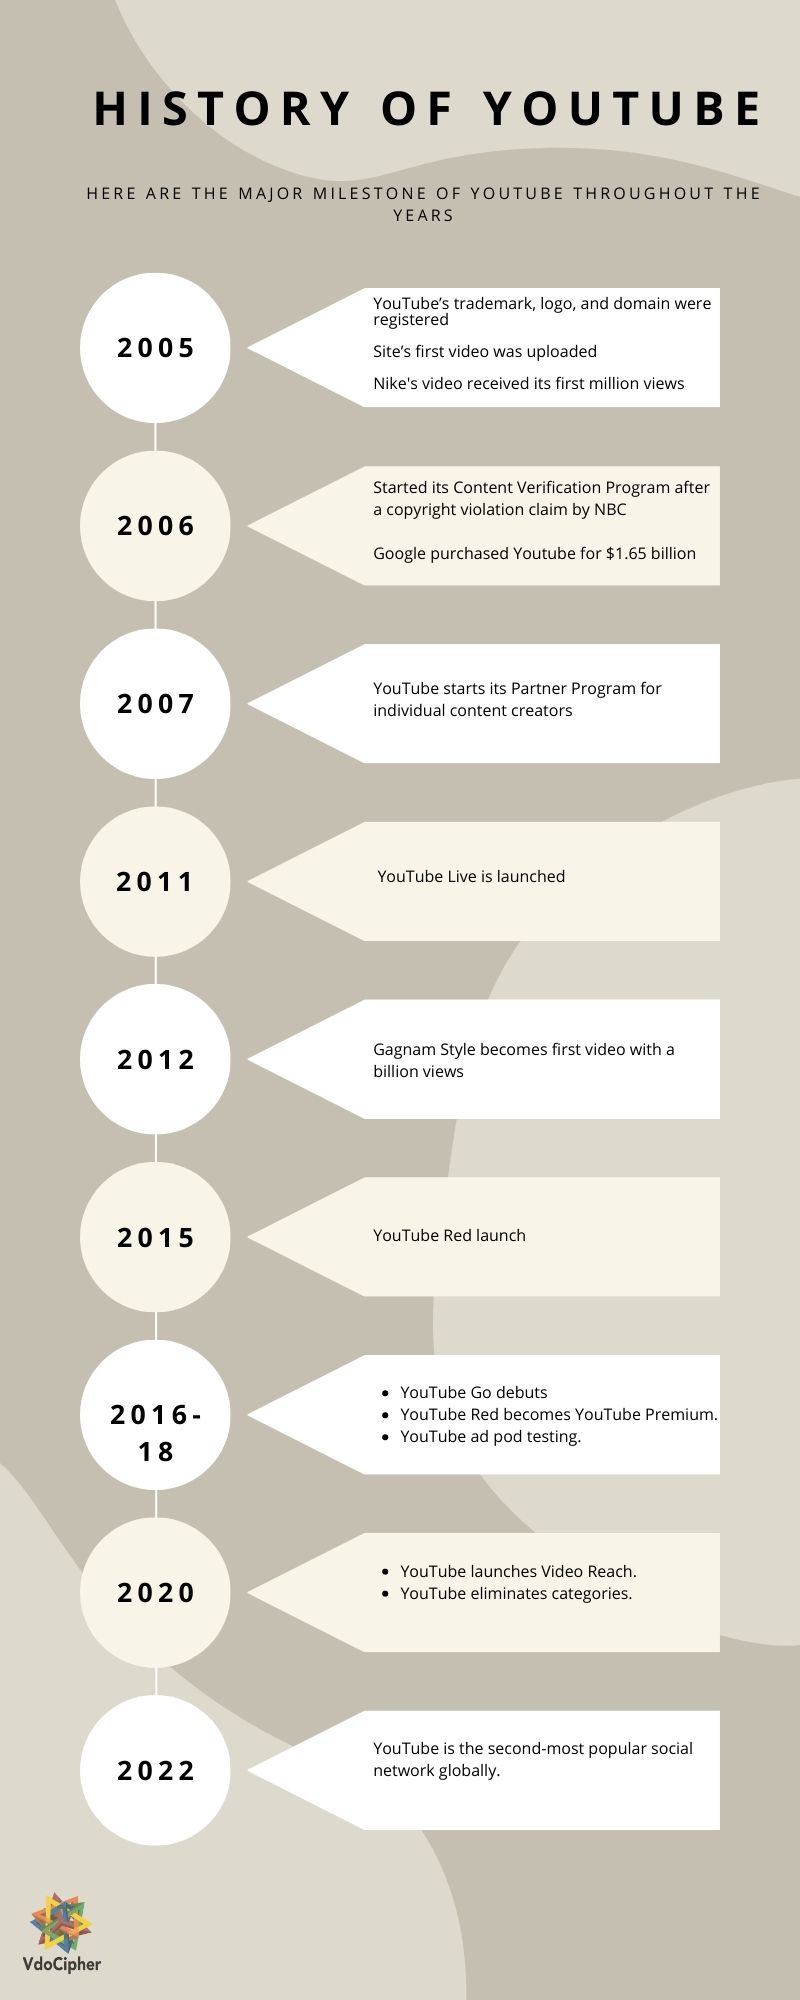 History of Youtube timeline